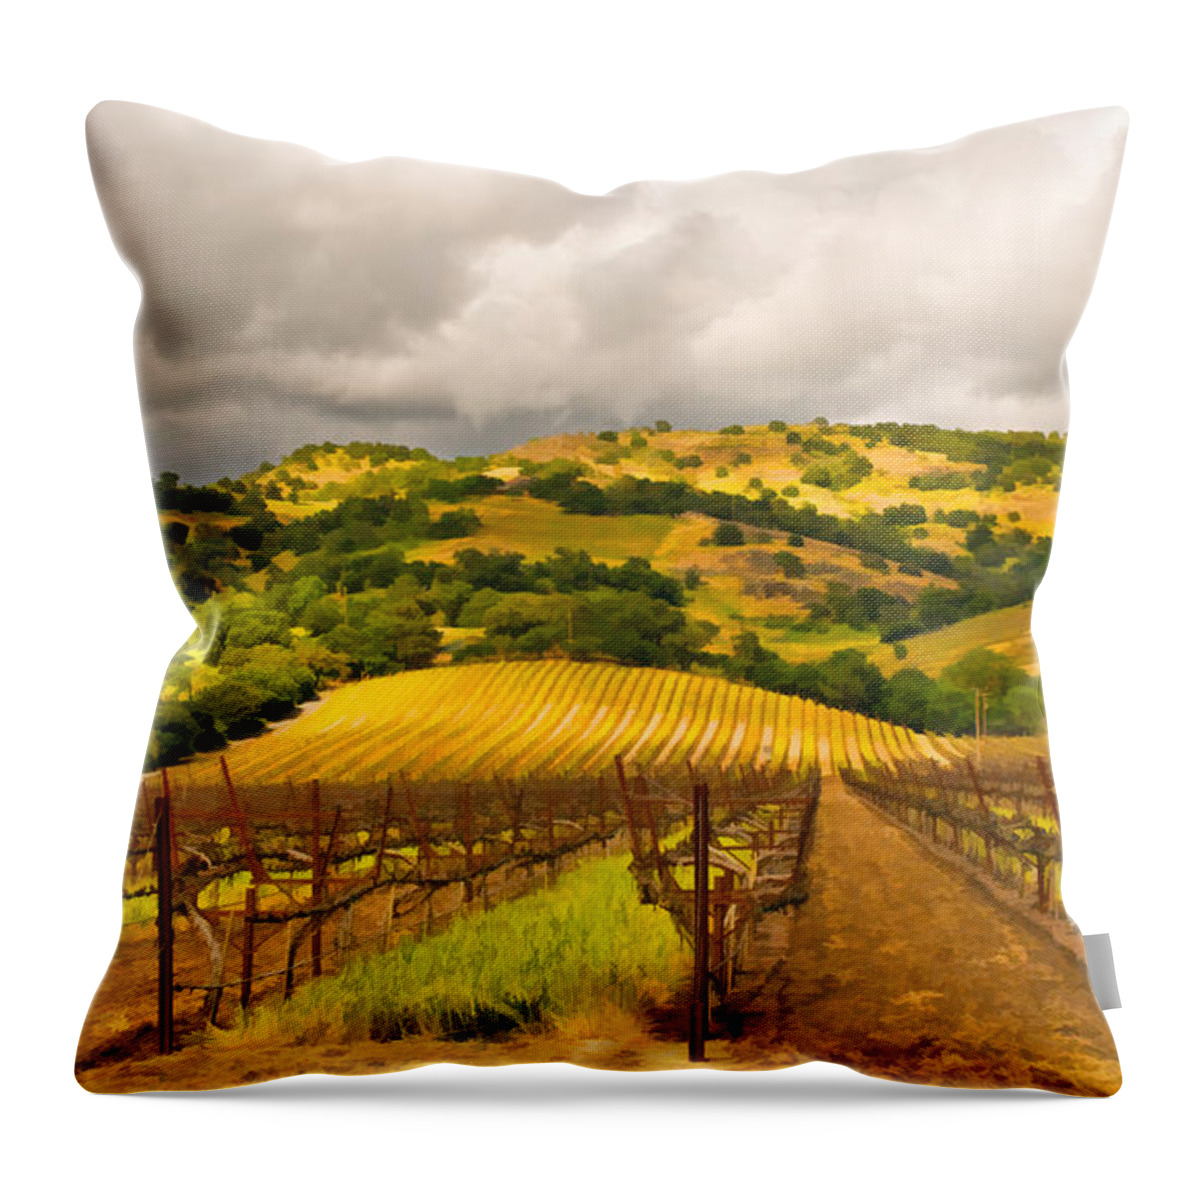 Napa Valley Throw Pillow featuring the digital art Napa Vineyard by Mick Burkey